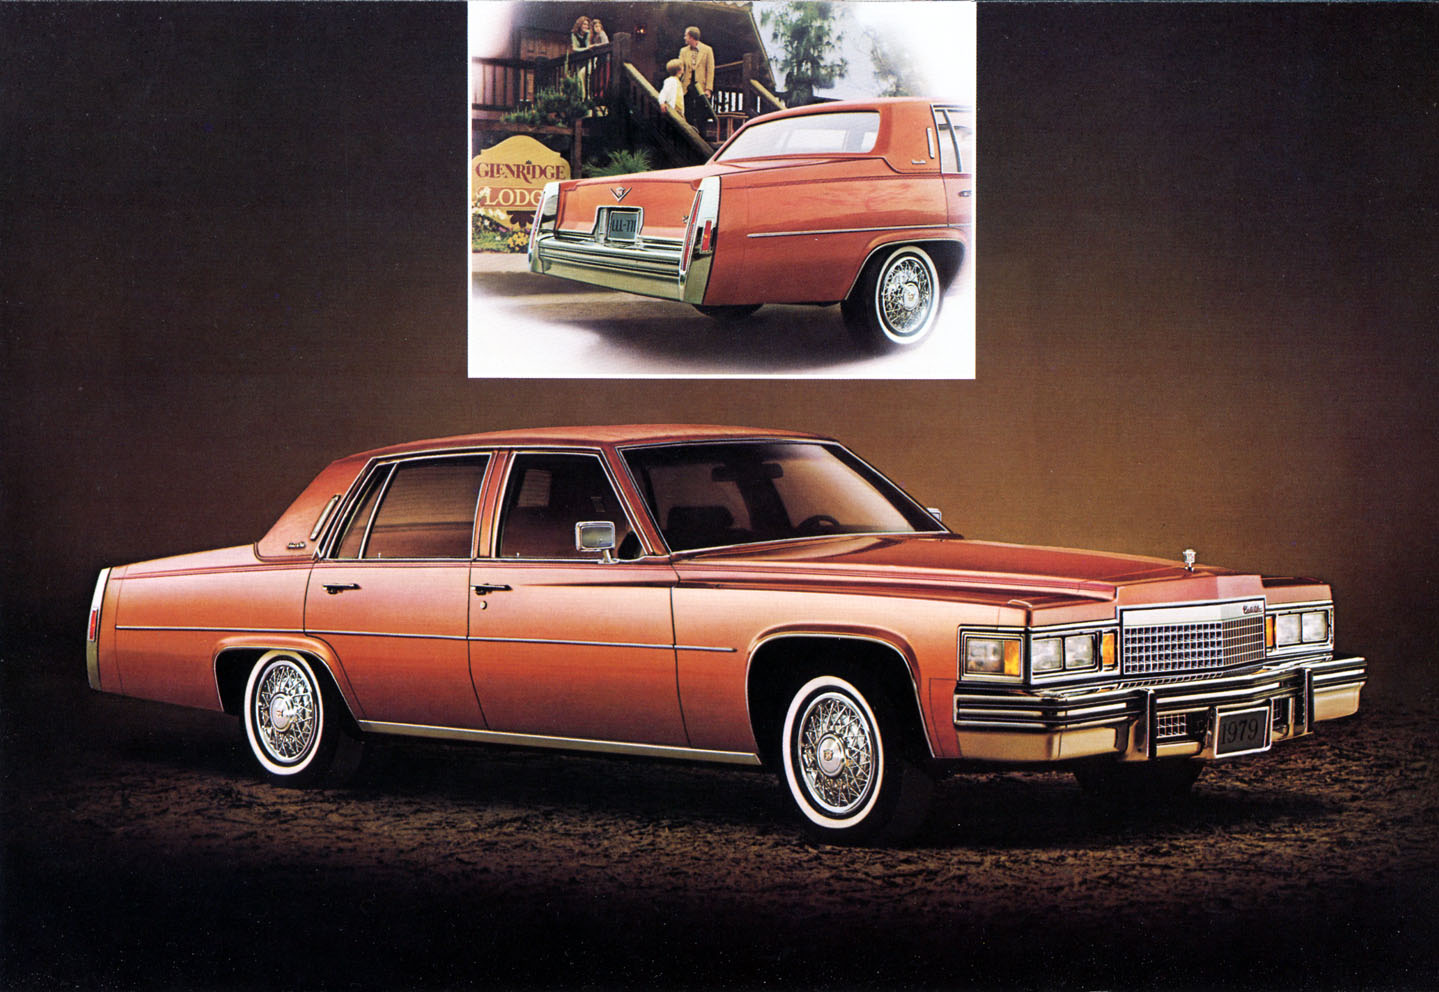 1979_Cadillac-a08